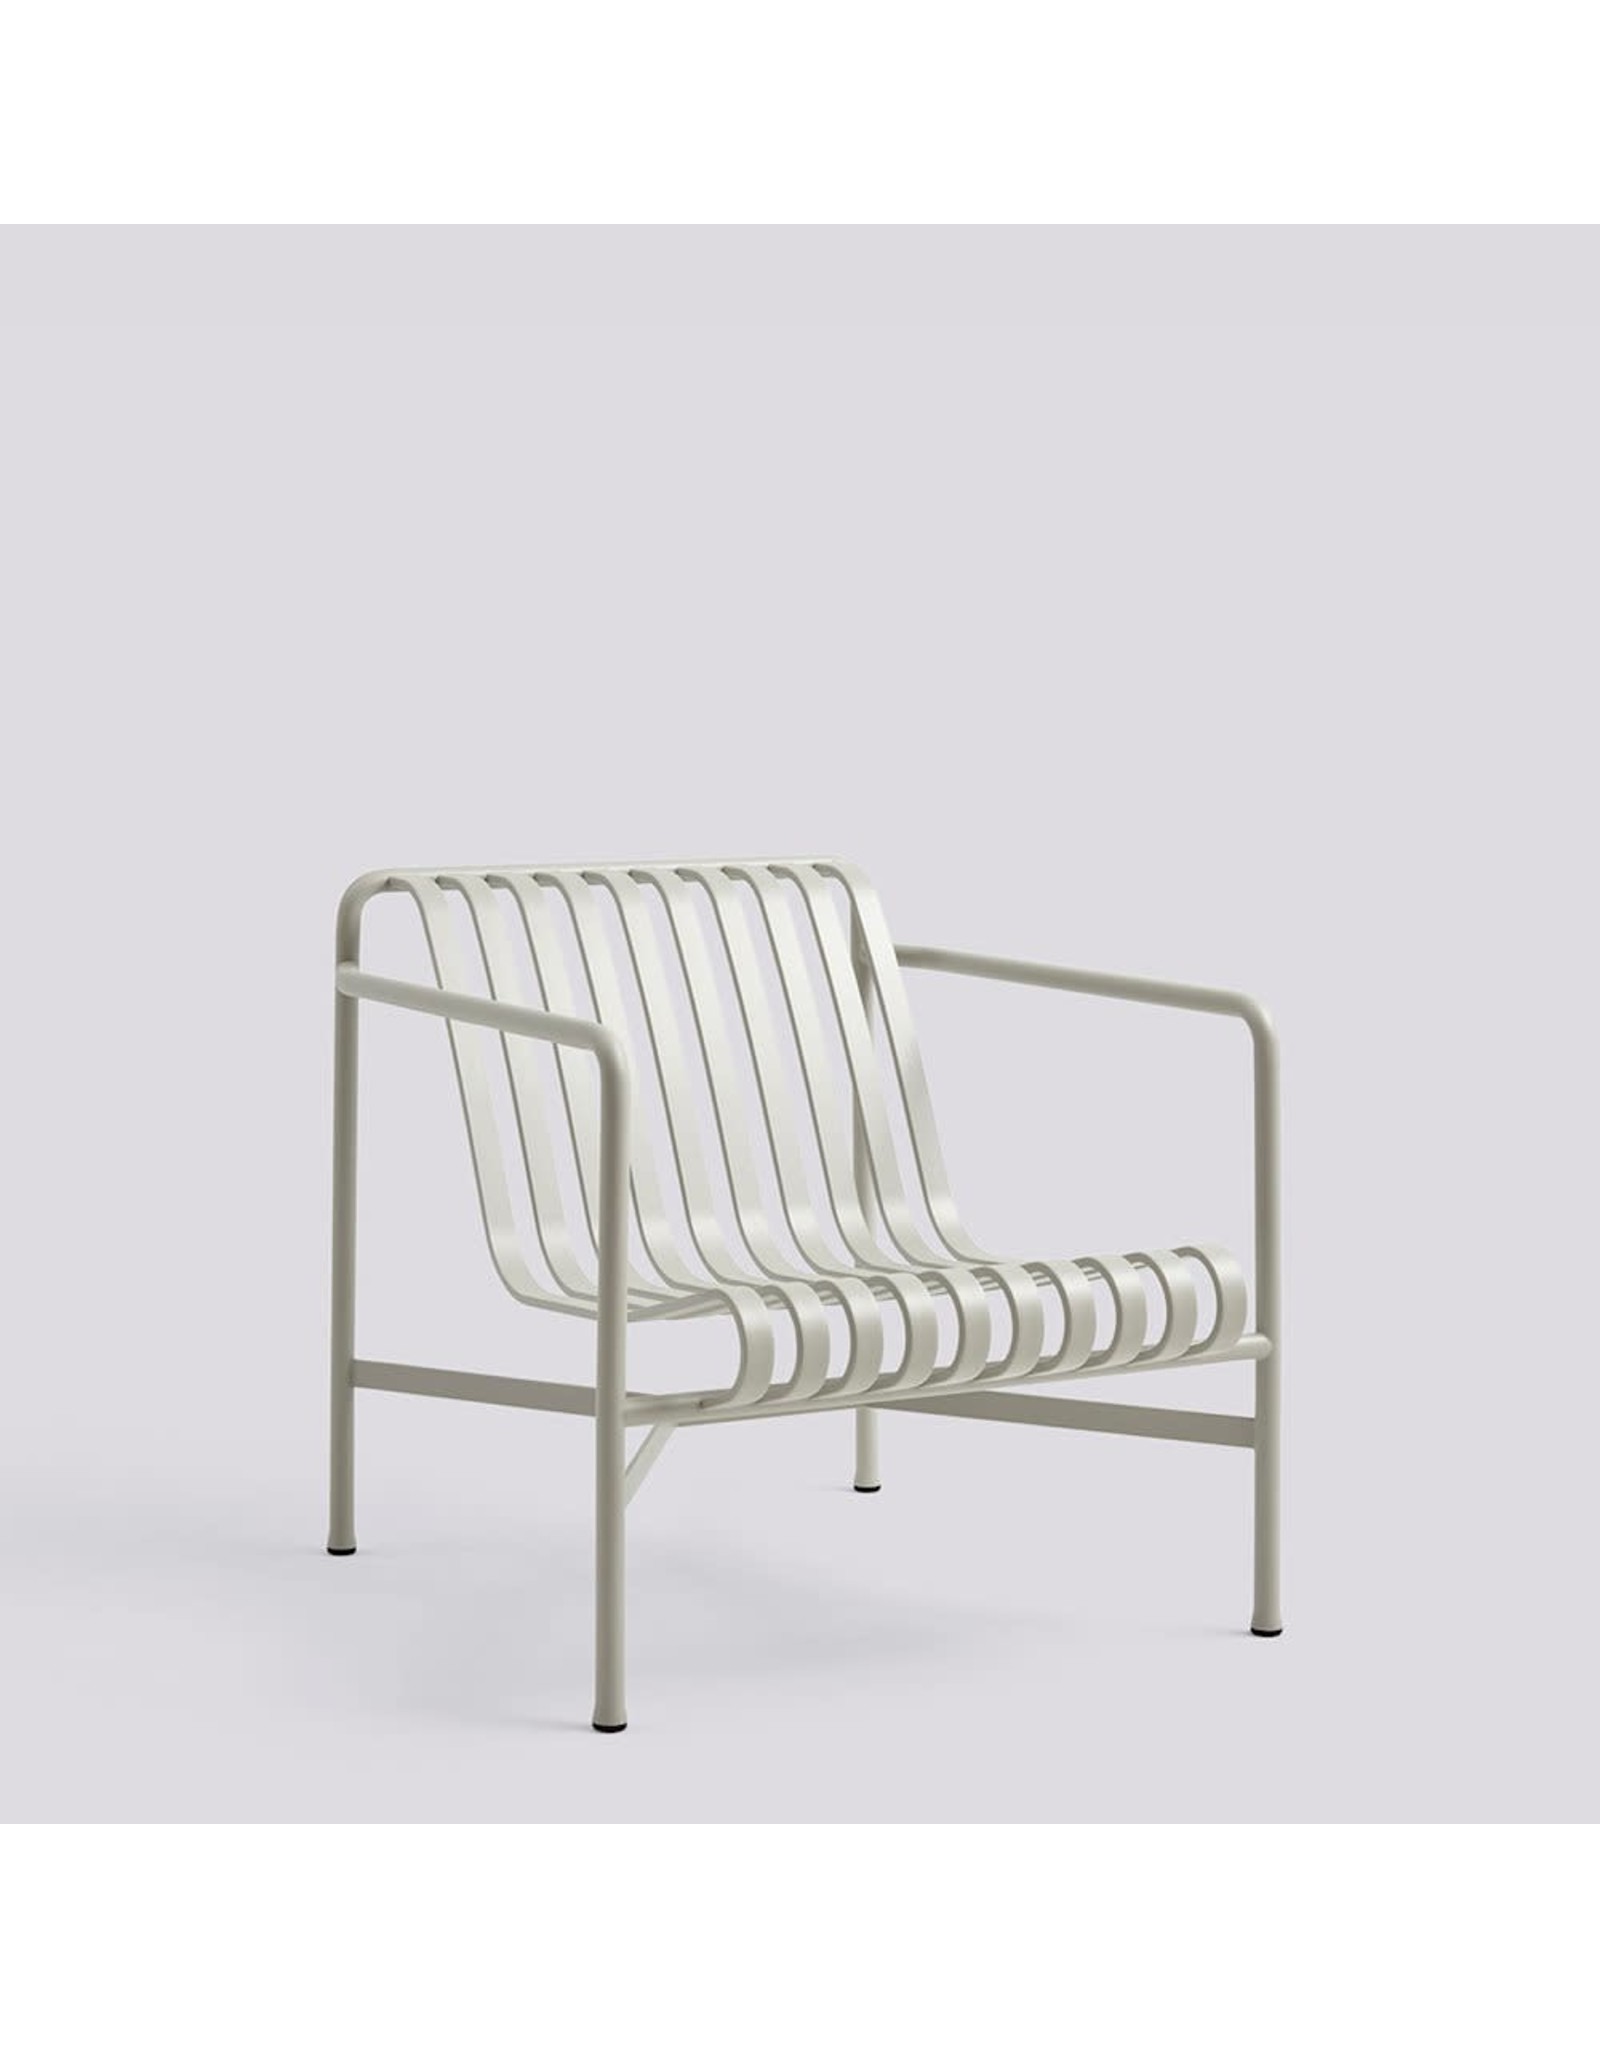 HAY Palissade Lounge Chair Low-Sky grey powder coated steel